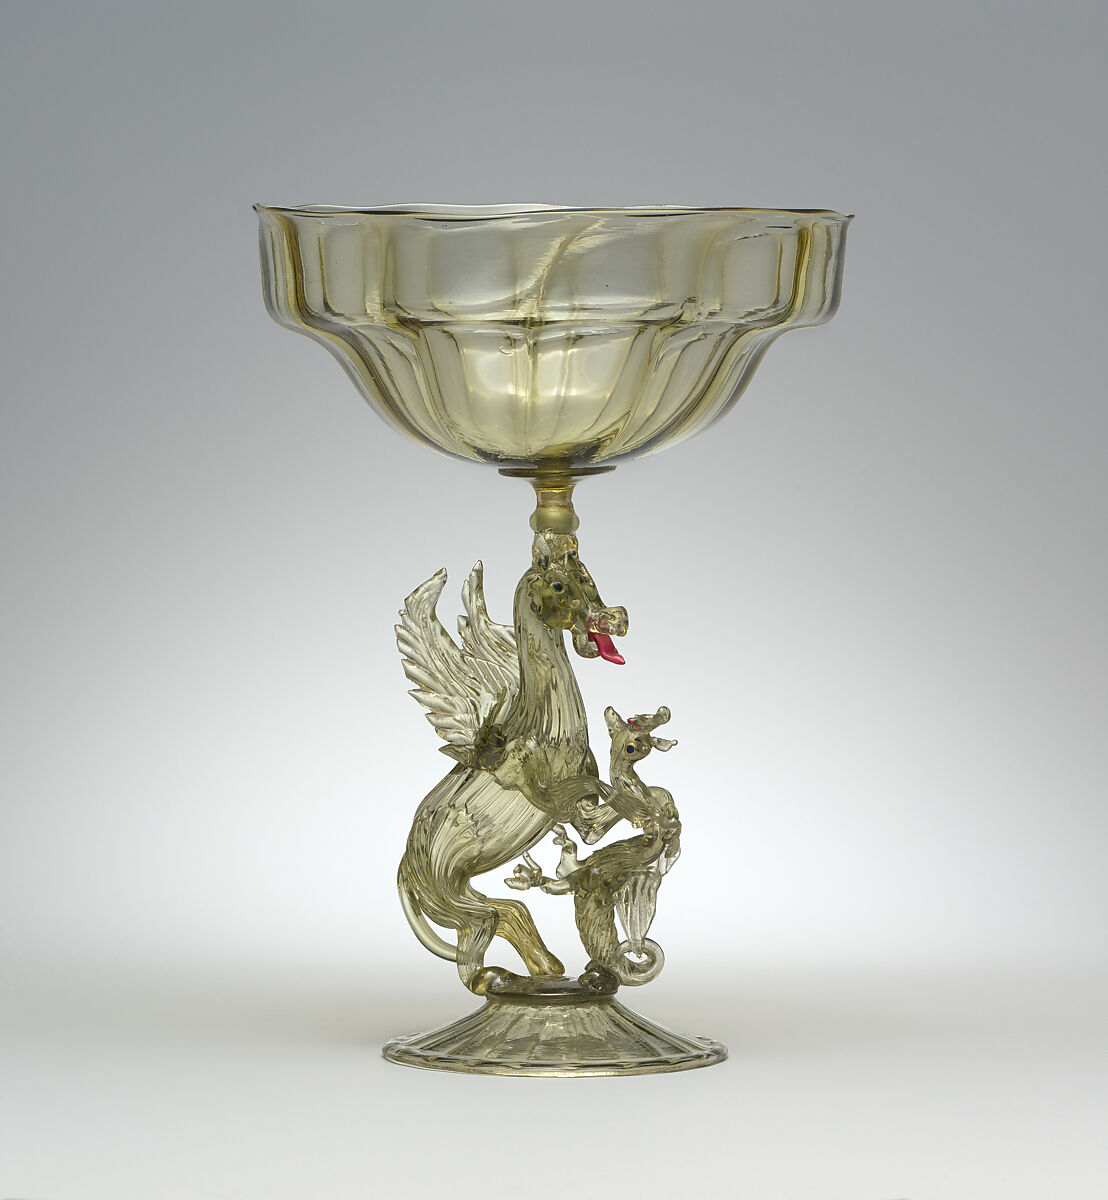 Standing cup, Glass, Italian, Venice (Murano) 